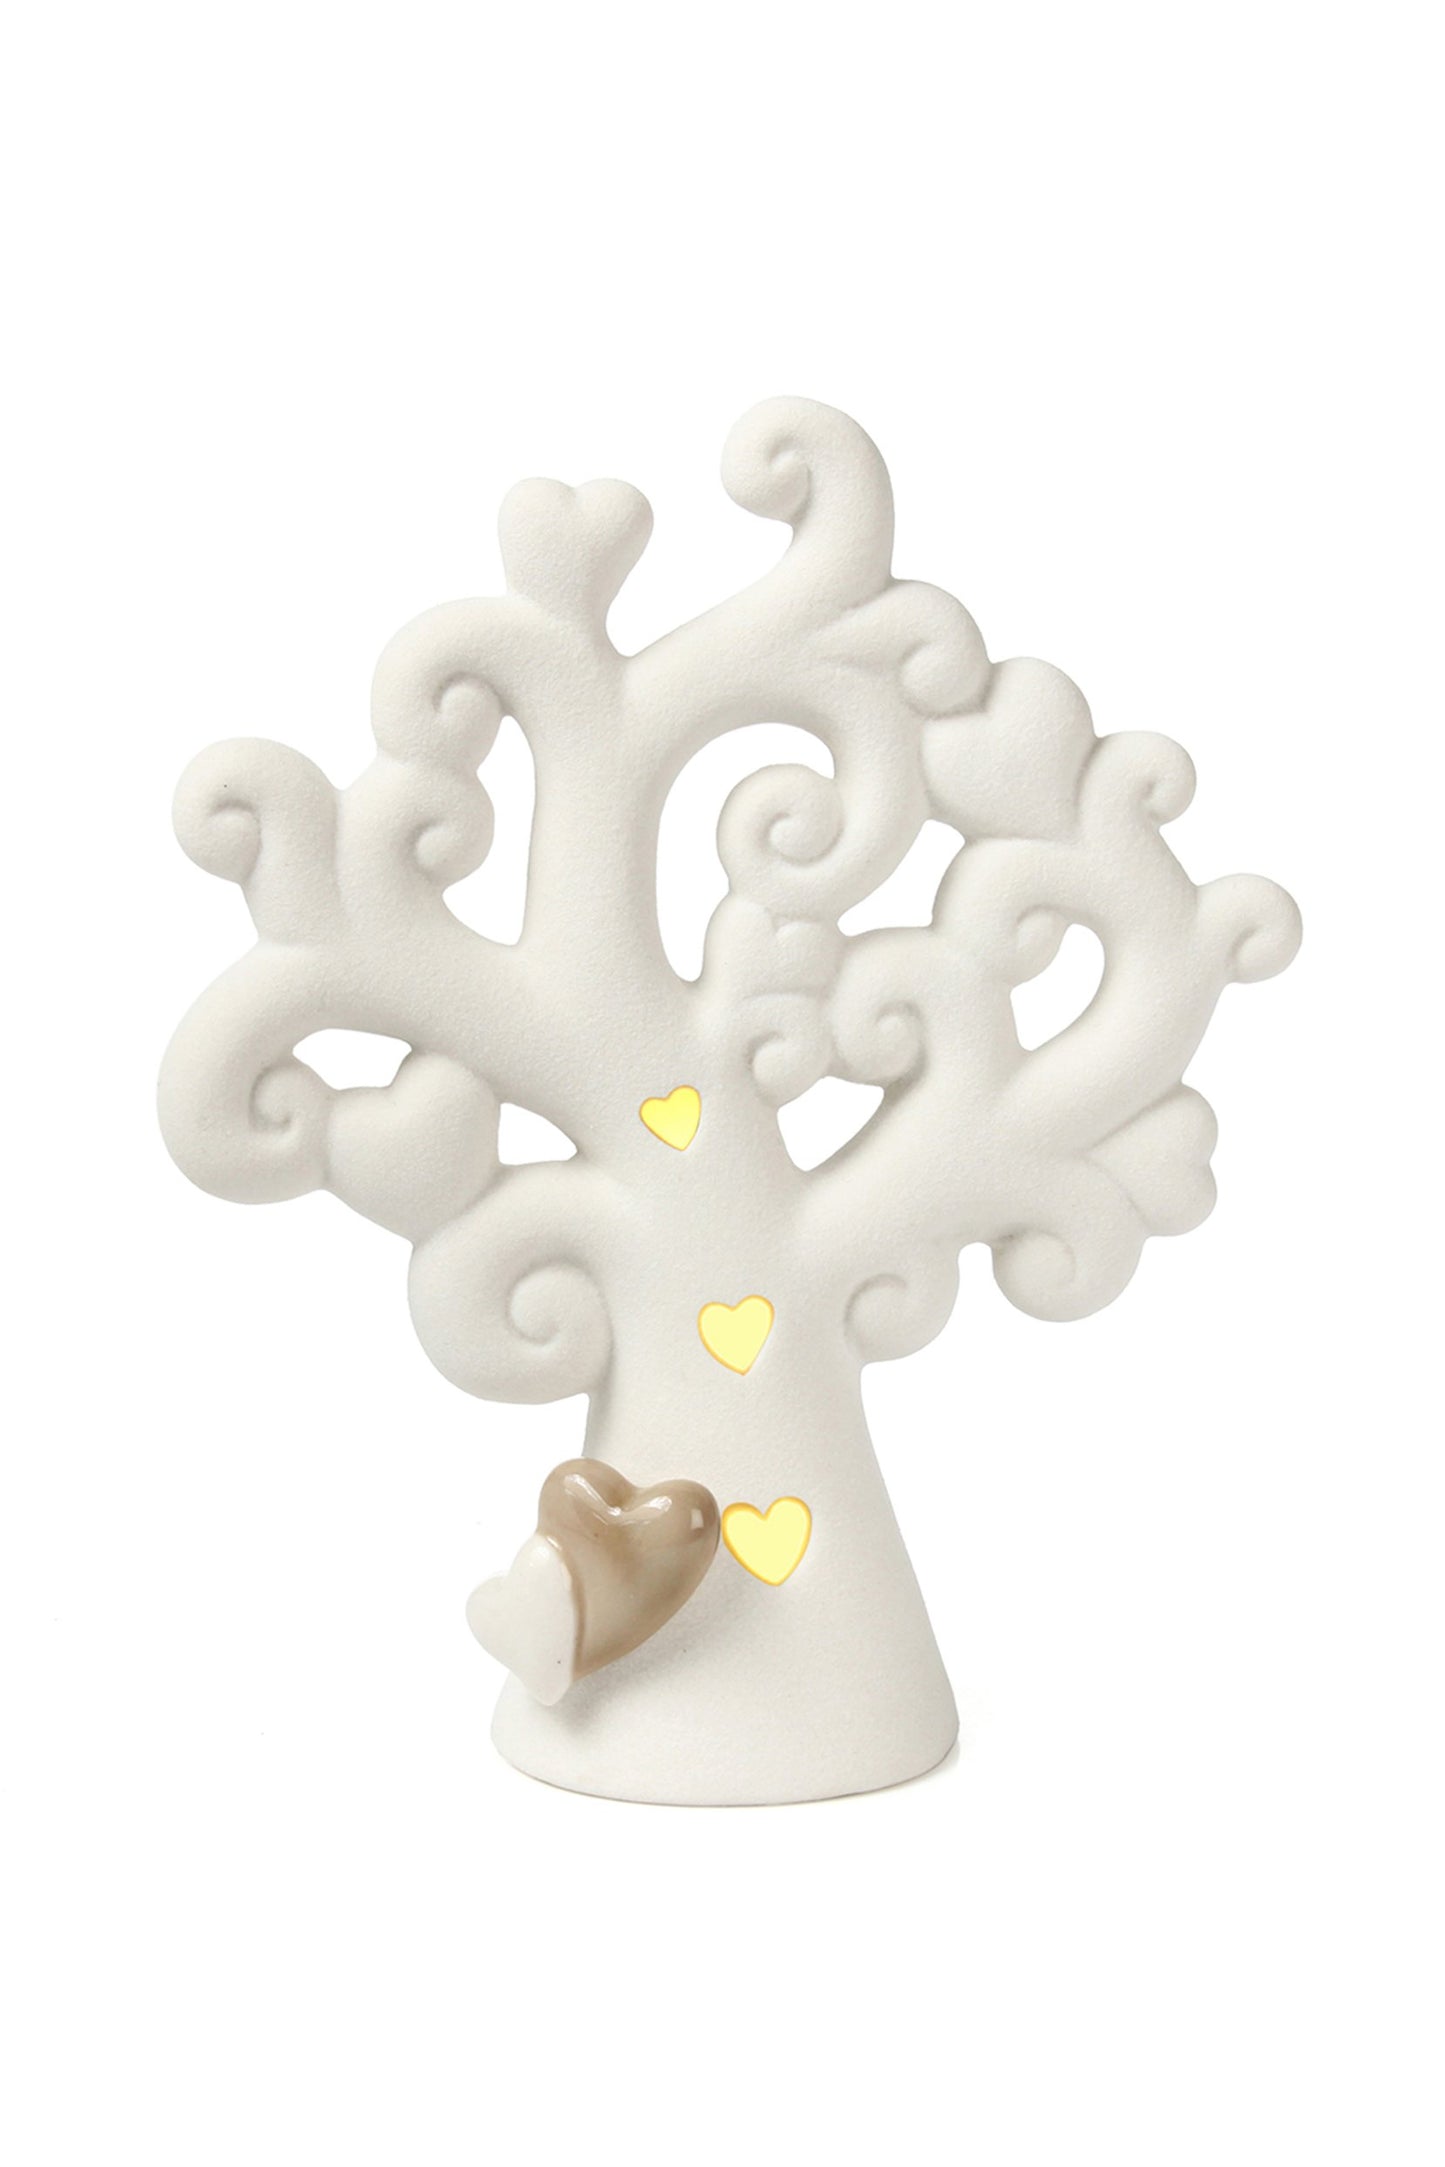 Handmade Tree of Love Light Up Sculpture 7.9Inch CGF0200 (Set of 1 pcs)